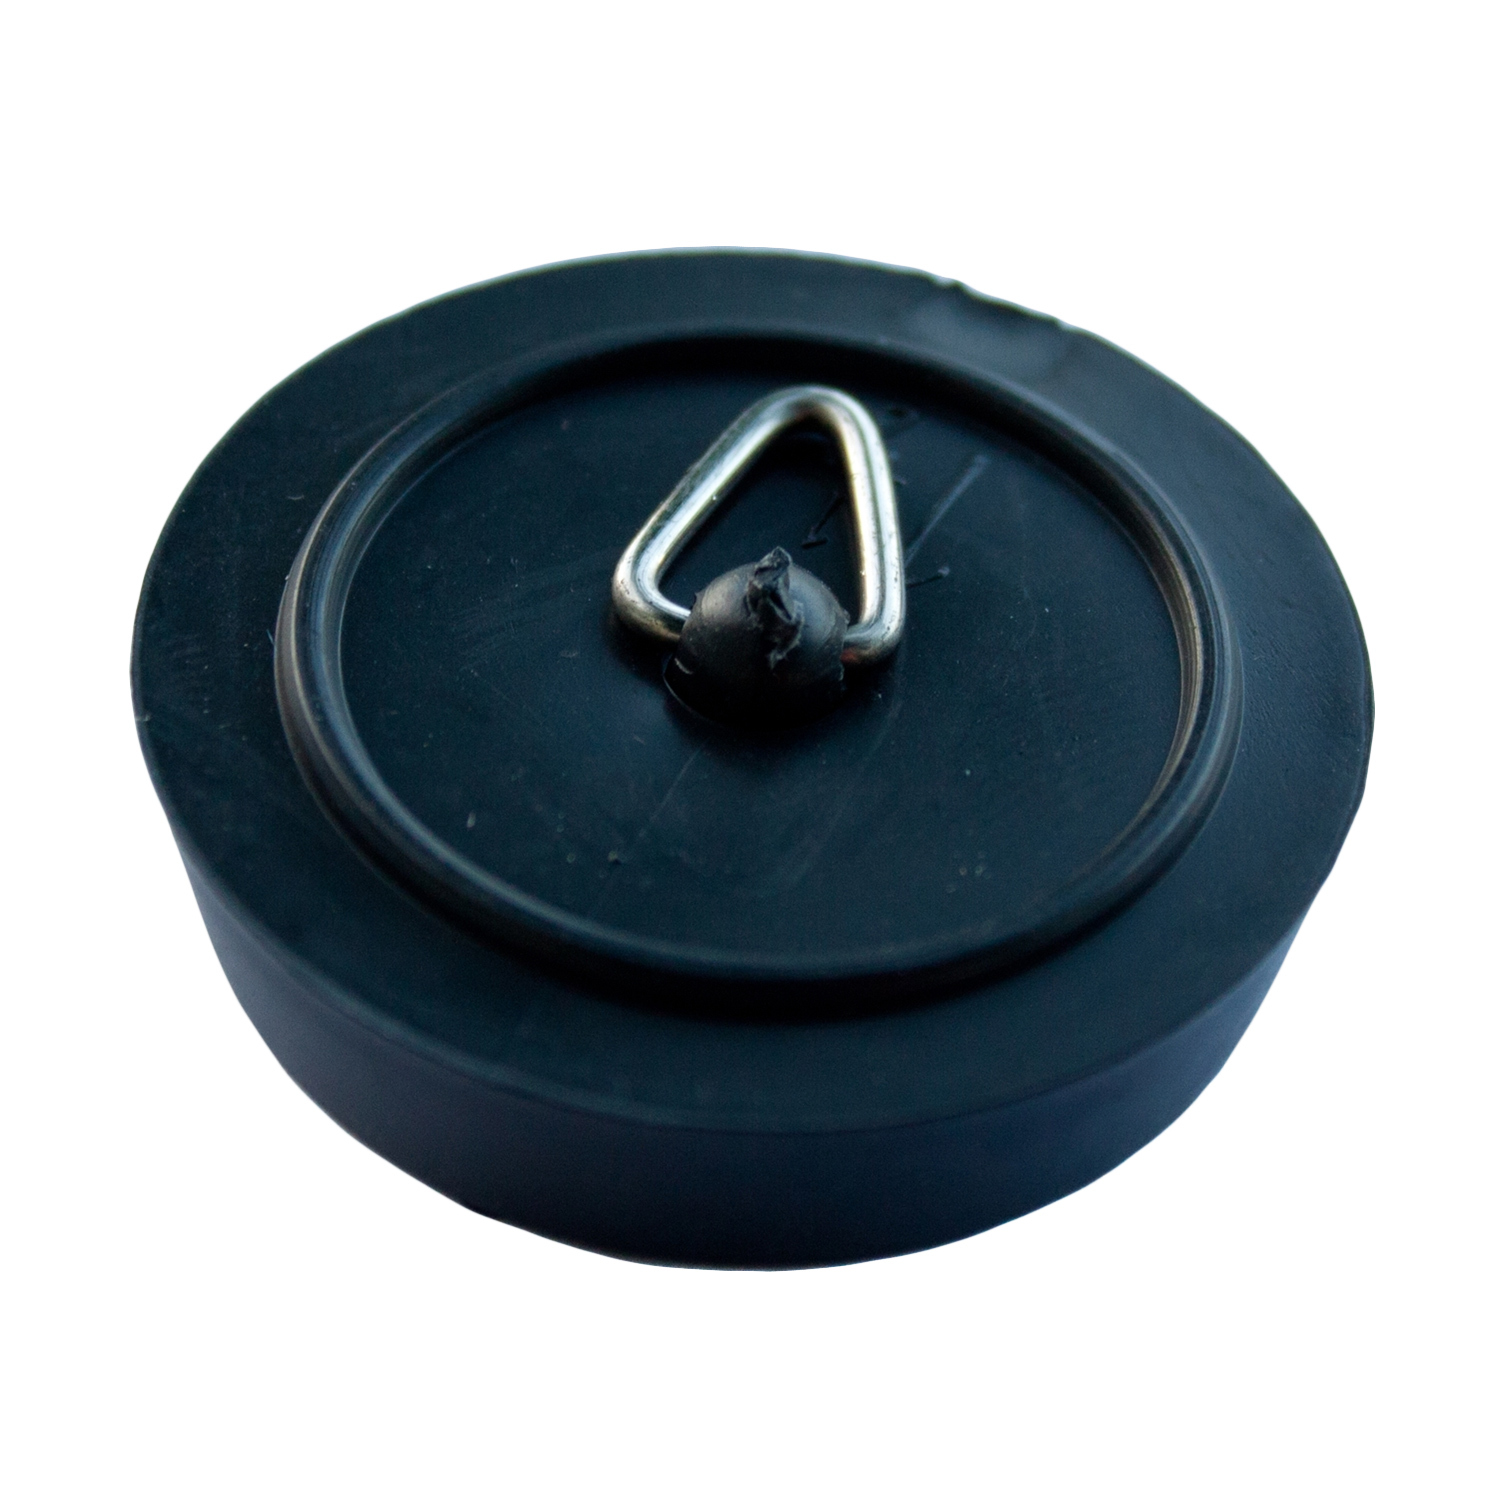 Oracstar Polythene Sink Plug - Black / 44.5mm Image